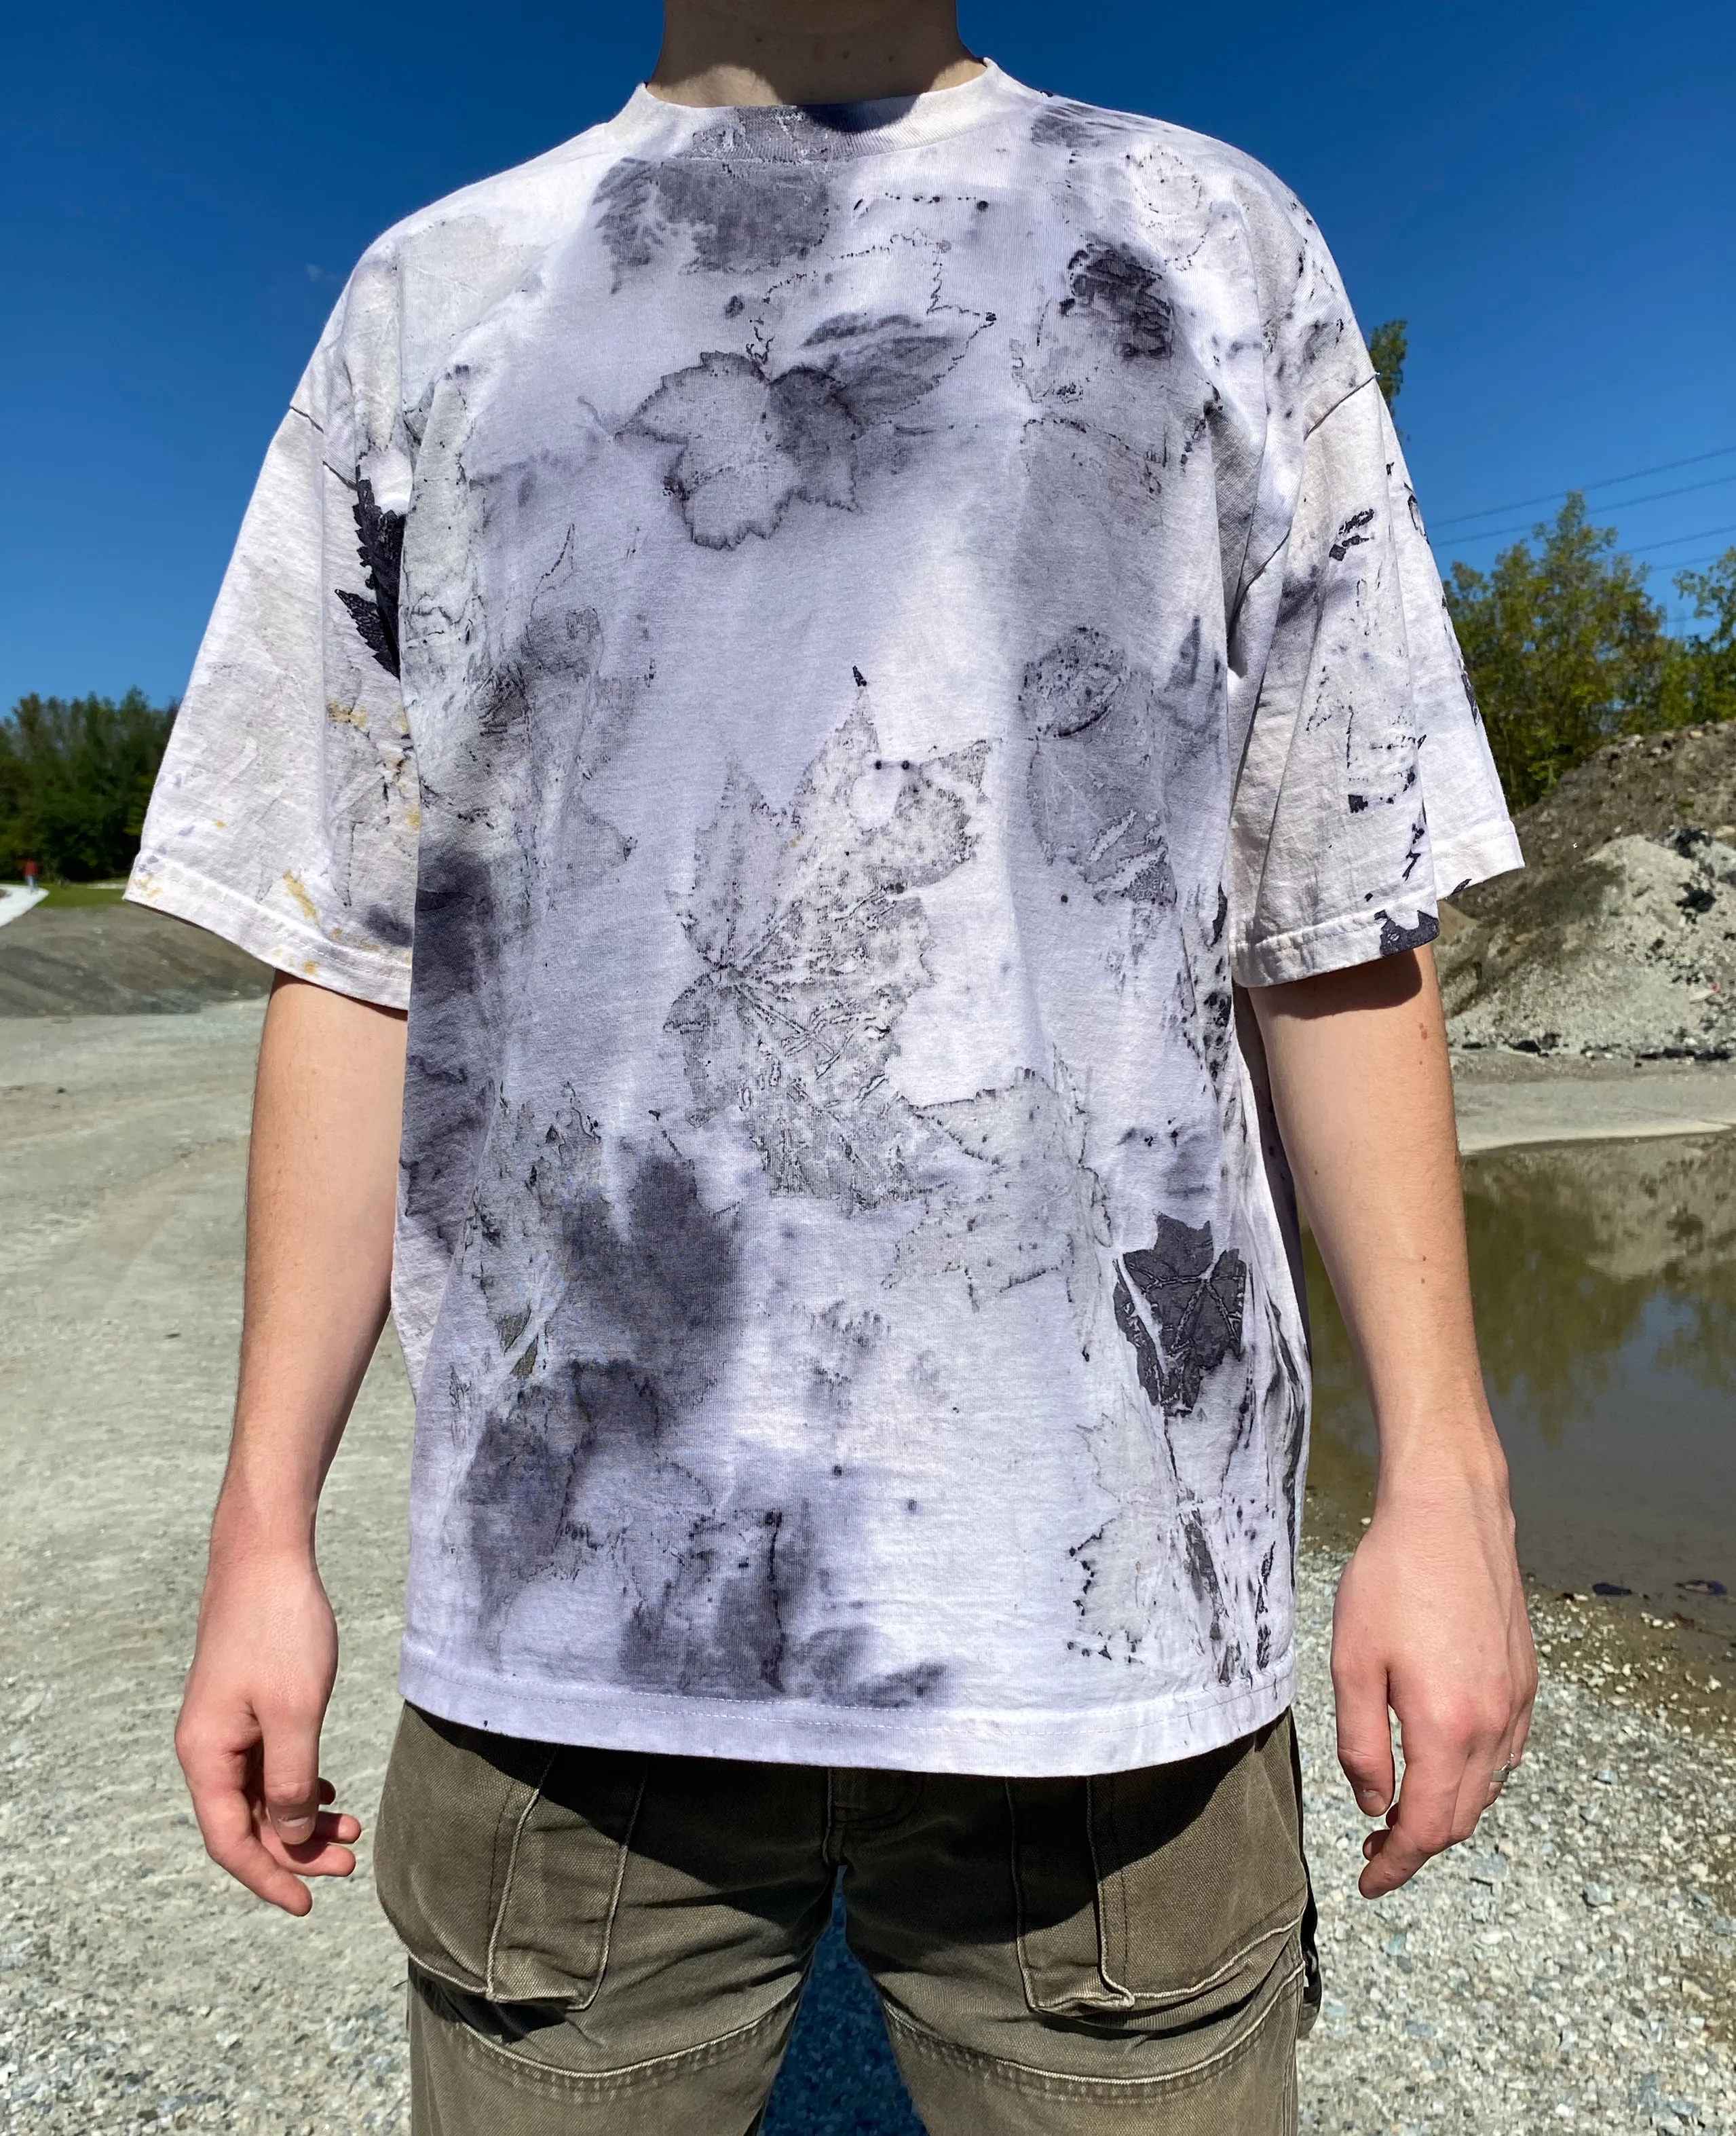 Eco-print t-shirt